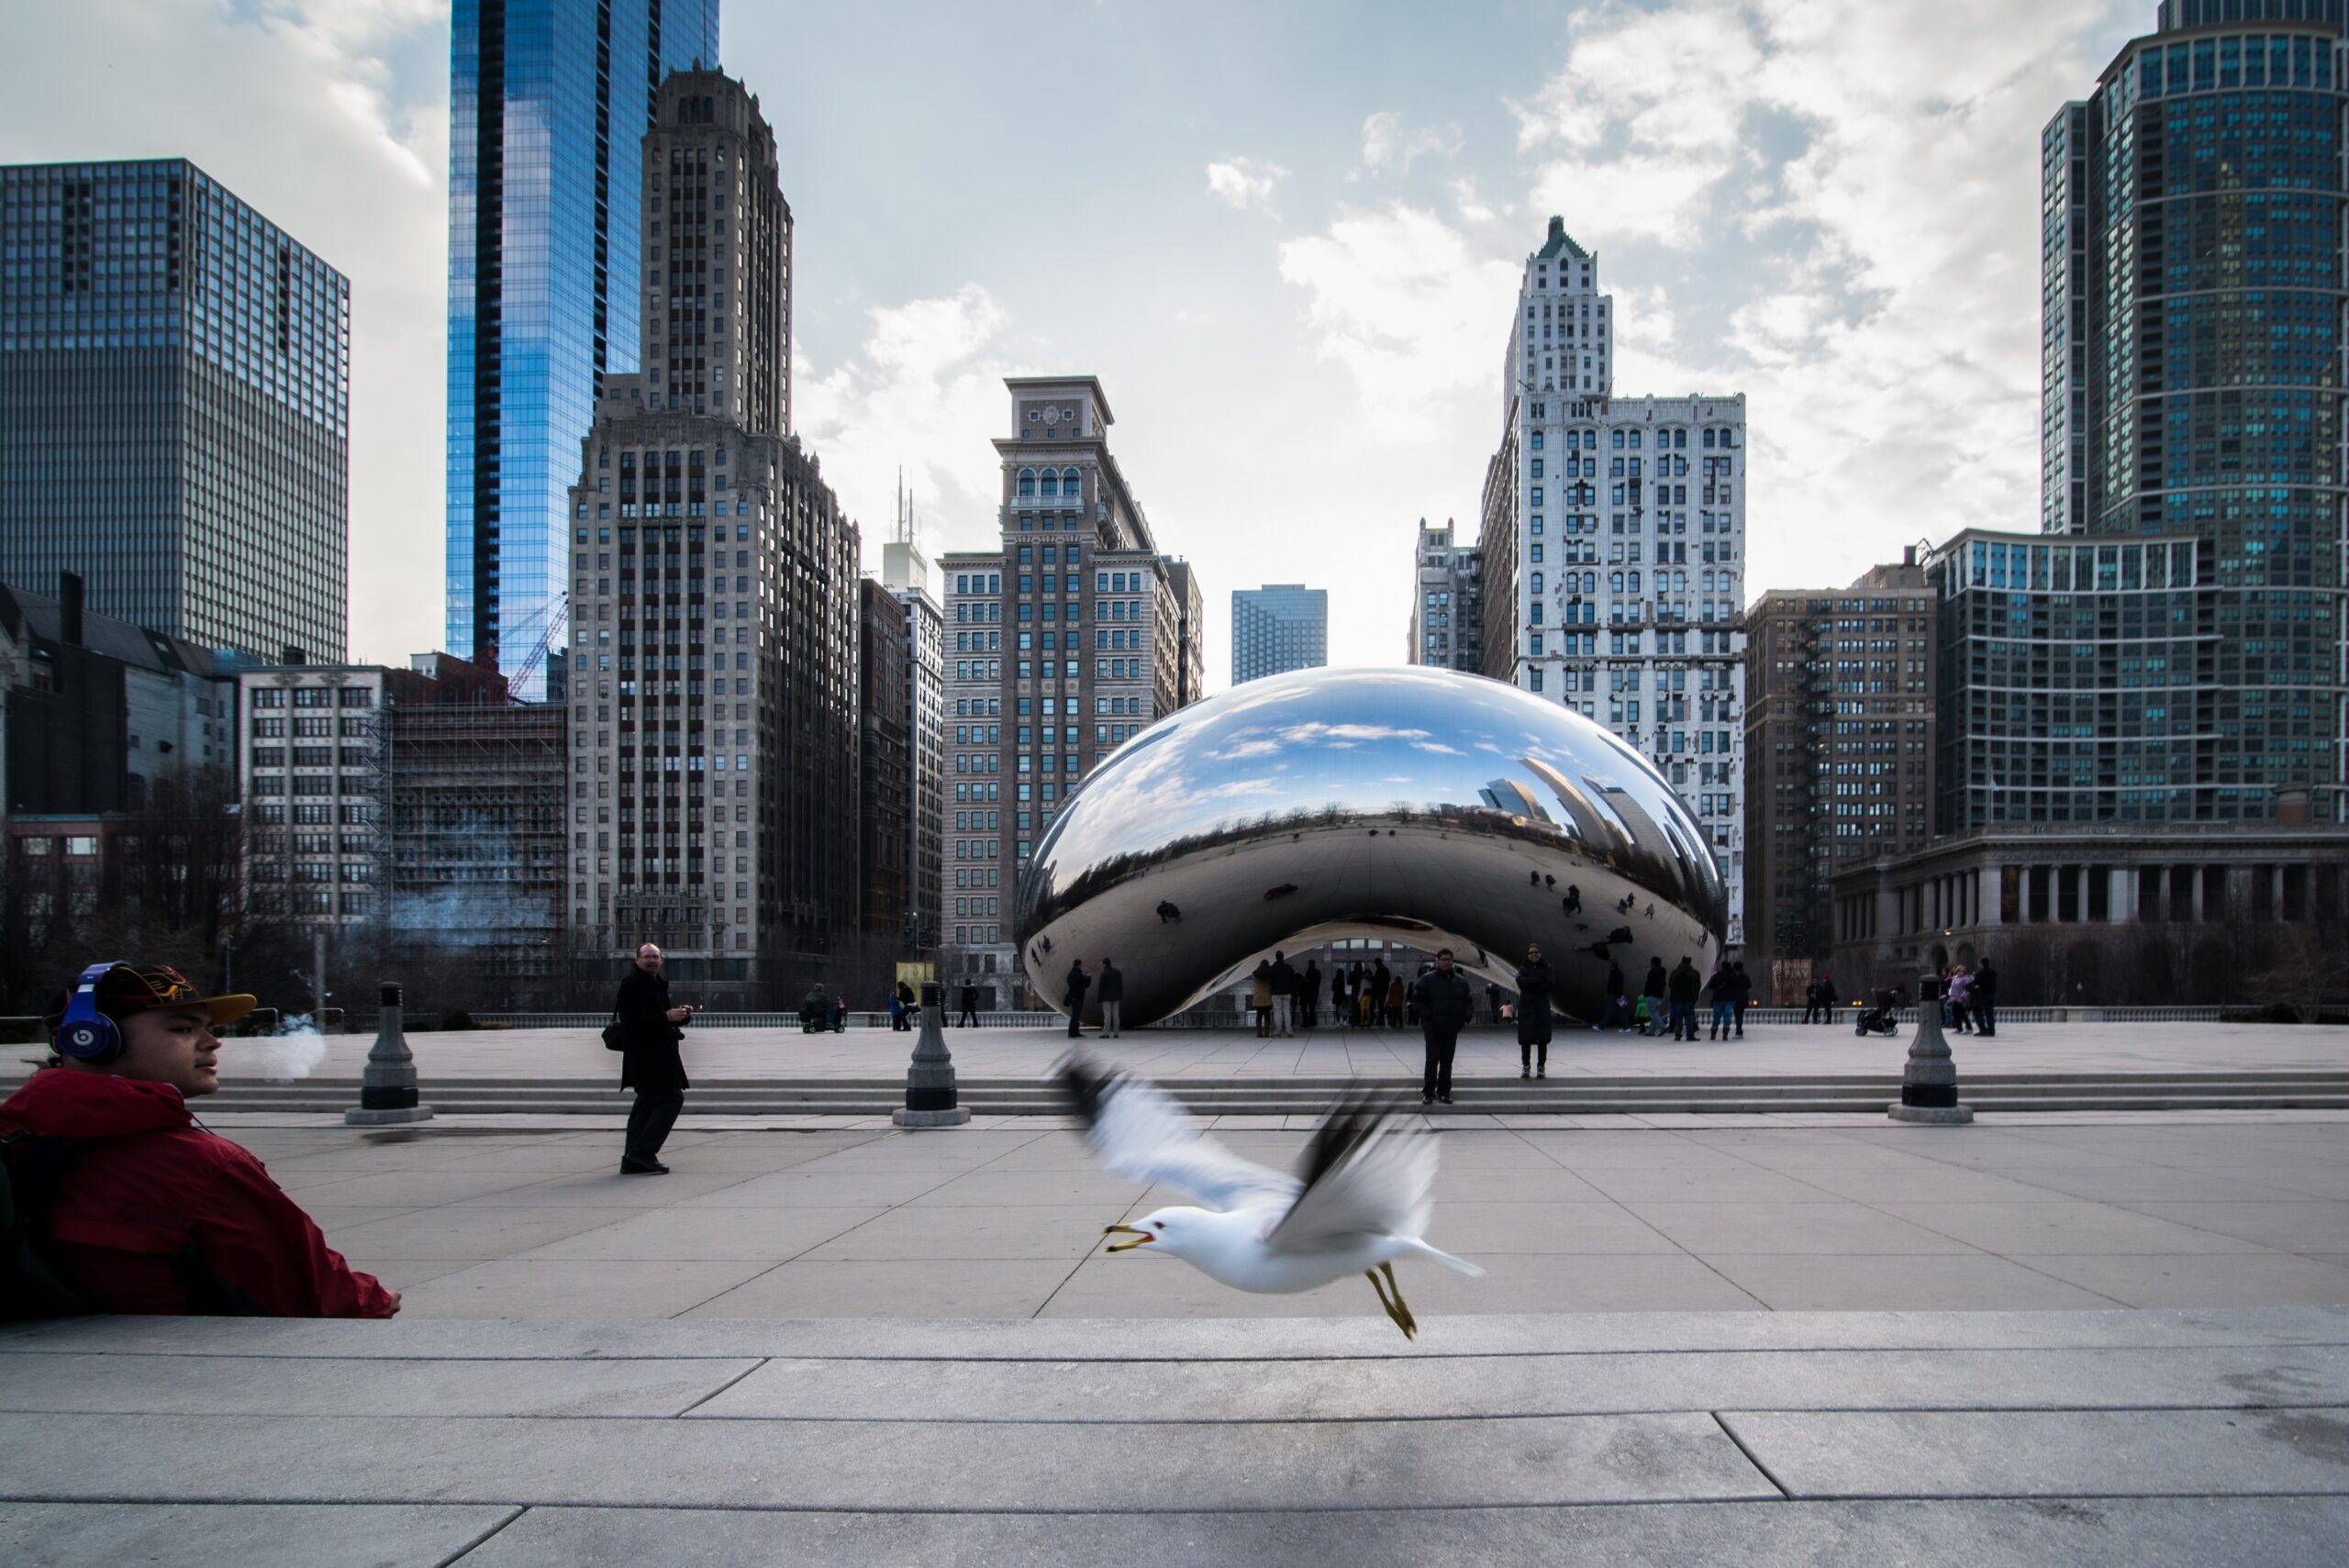 cloud gate statue in Chicago, Illinois